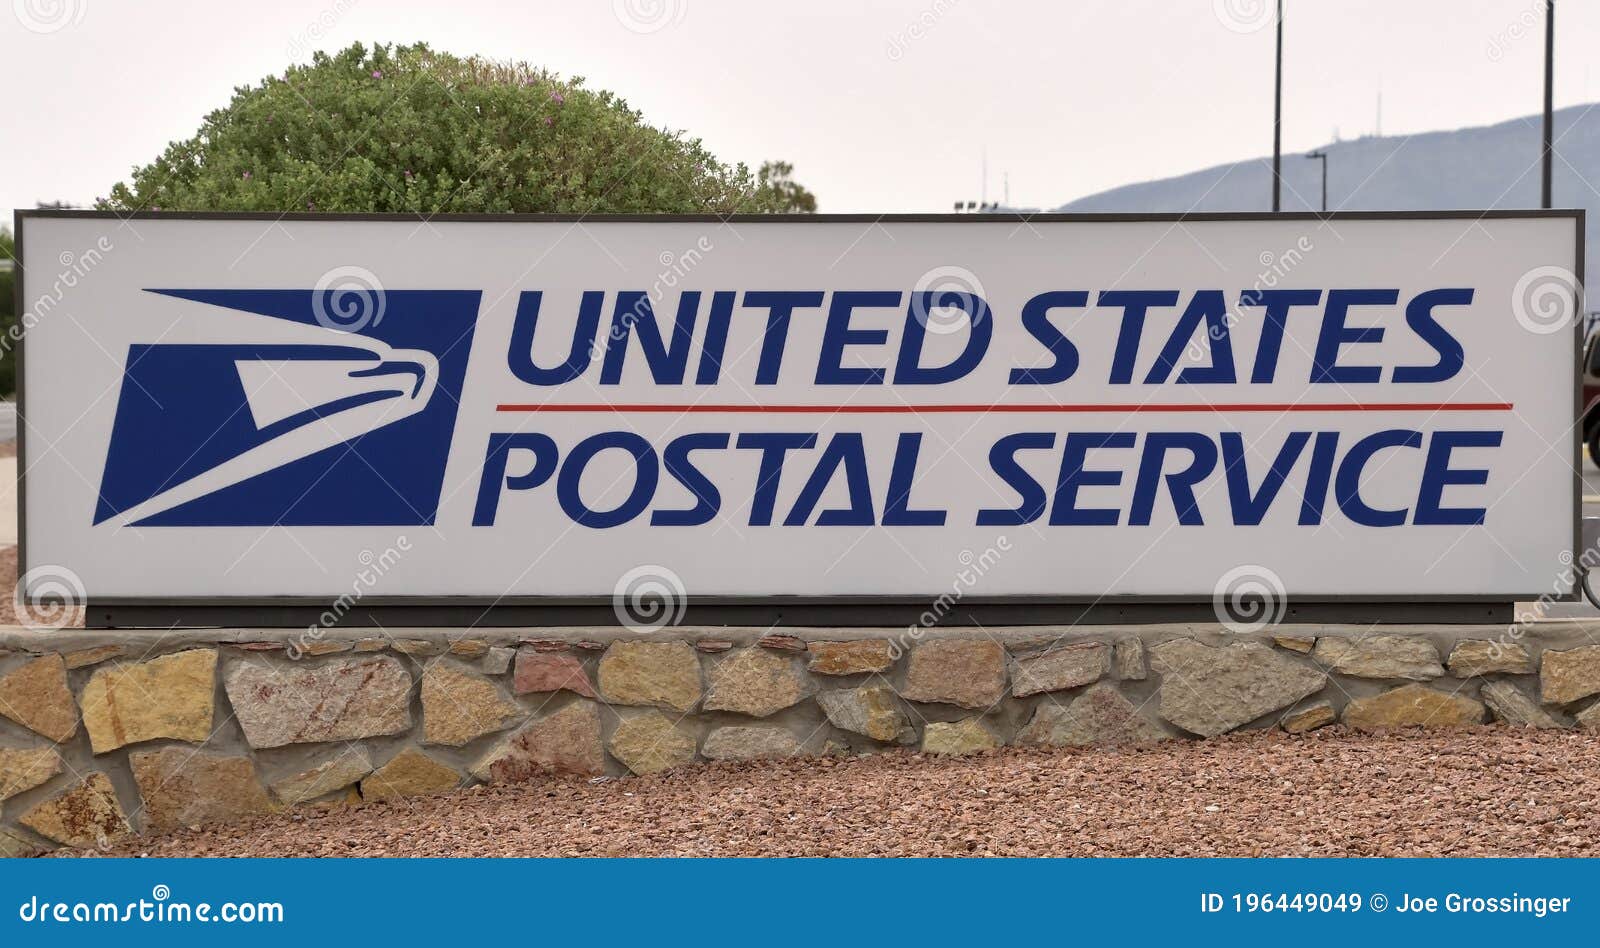 Signage US Postal Service editorial stock image. Image of ship - 196449049